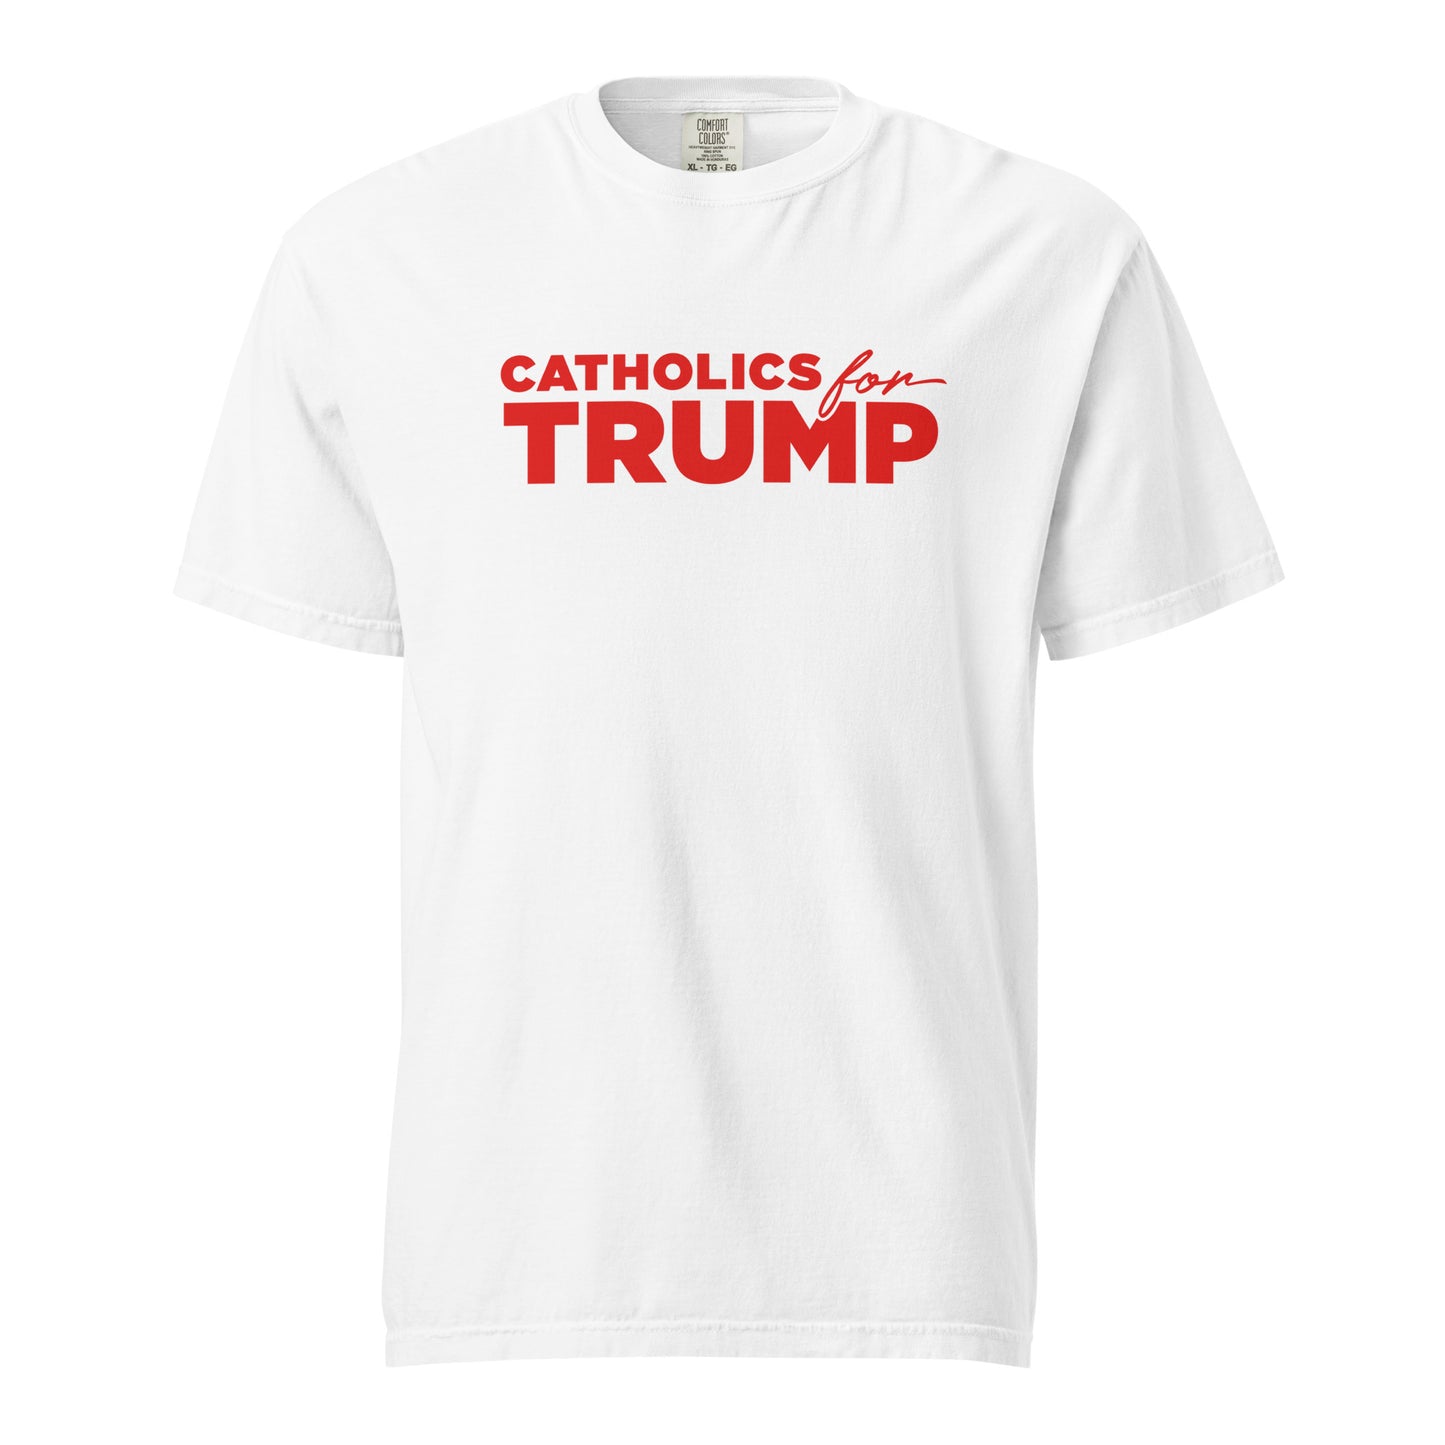 Catholics for Trump Tee - White